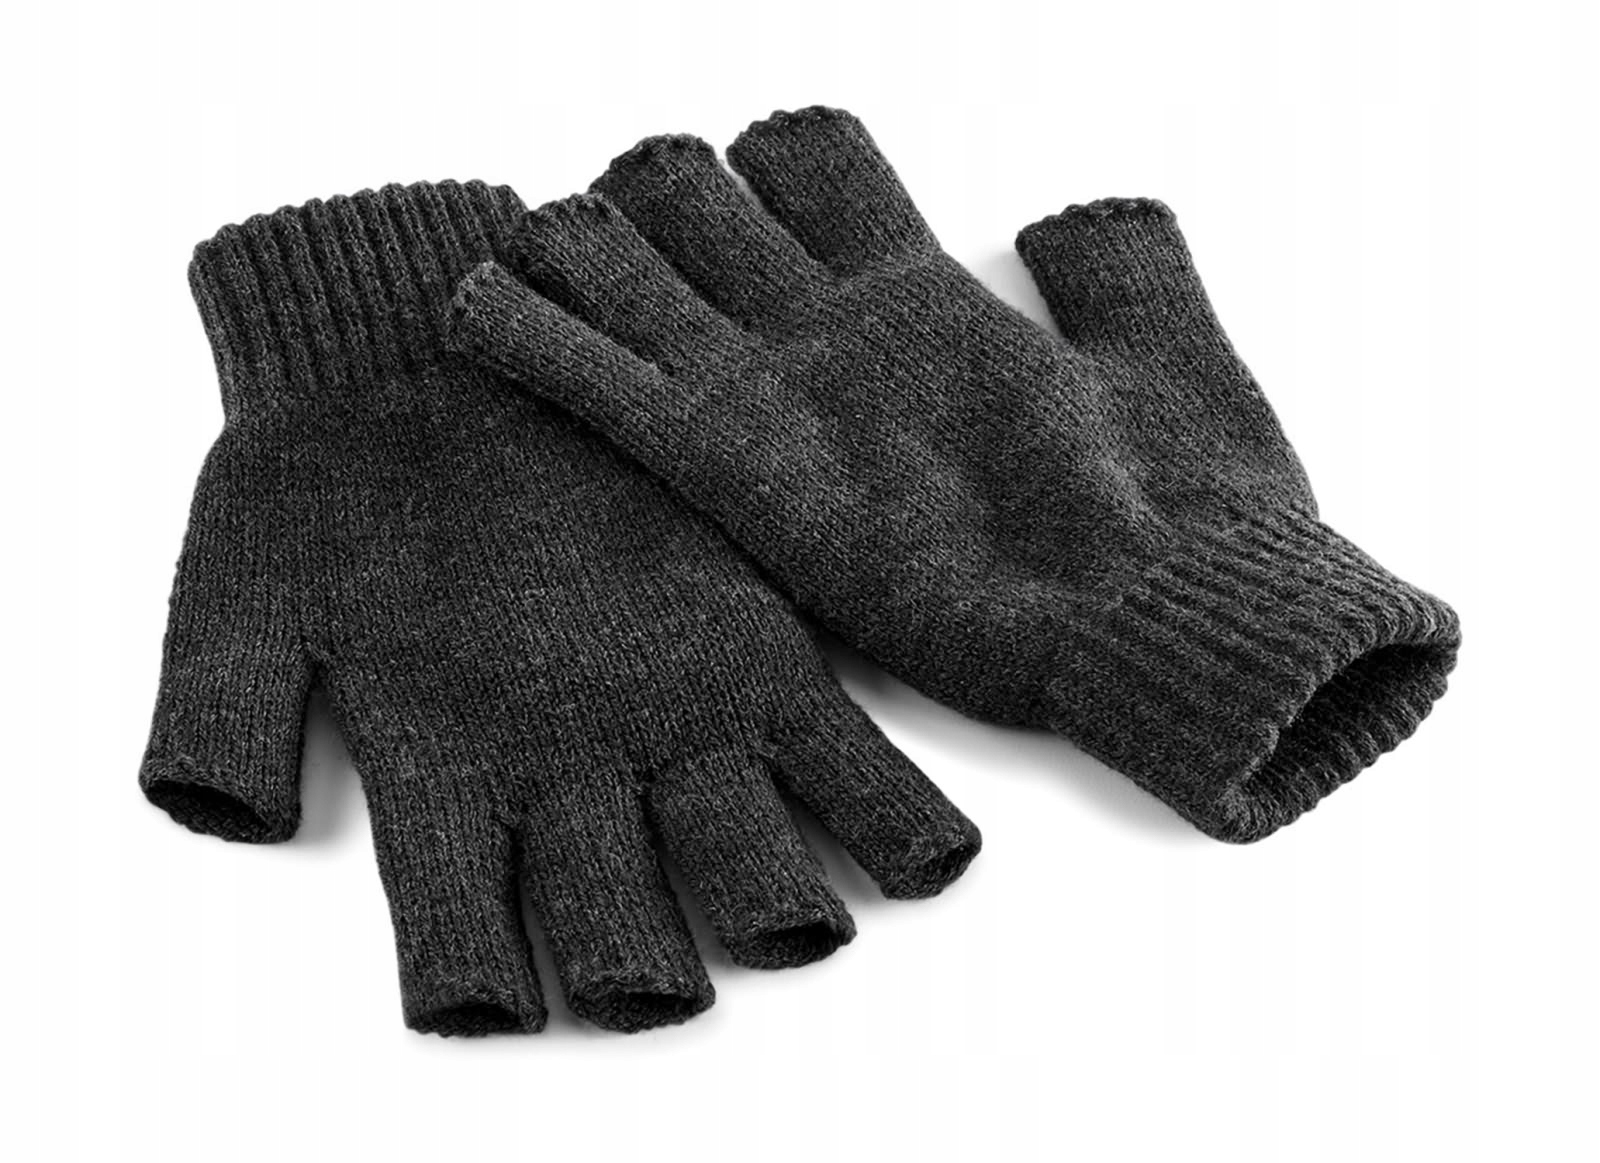 Купить перчатки l. Перчатки Винтер 136-0053-01. Перчатки варежки мужские. Перчатки без пальцев зимние. Перчатки мужские зимние.